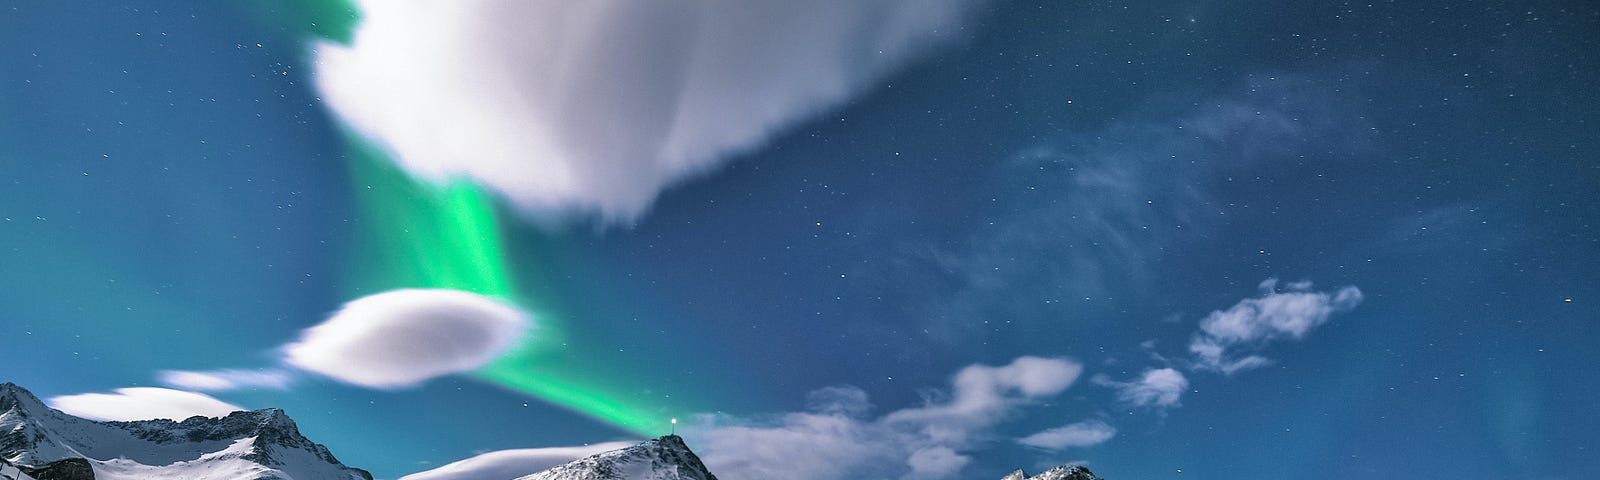 Image of the Northern Lights. Credit: Pexels Stein Egil Liland, Unsplash